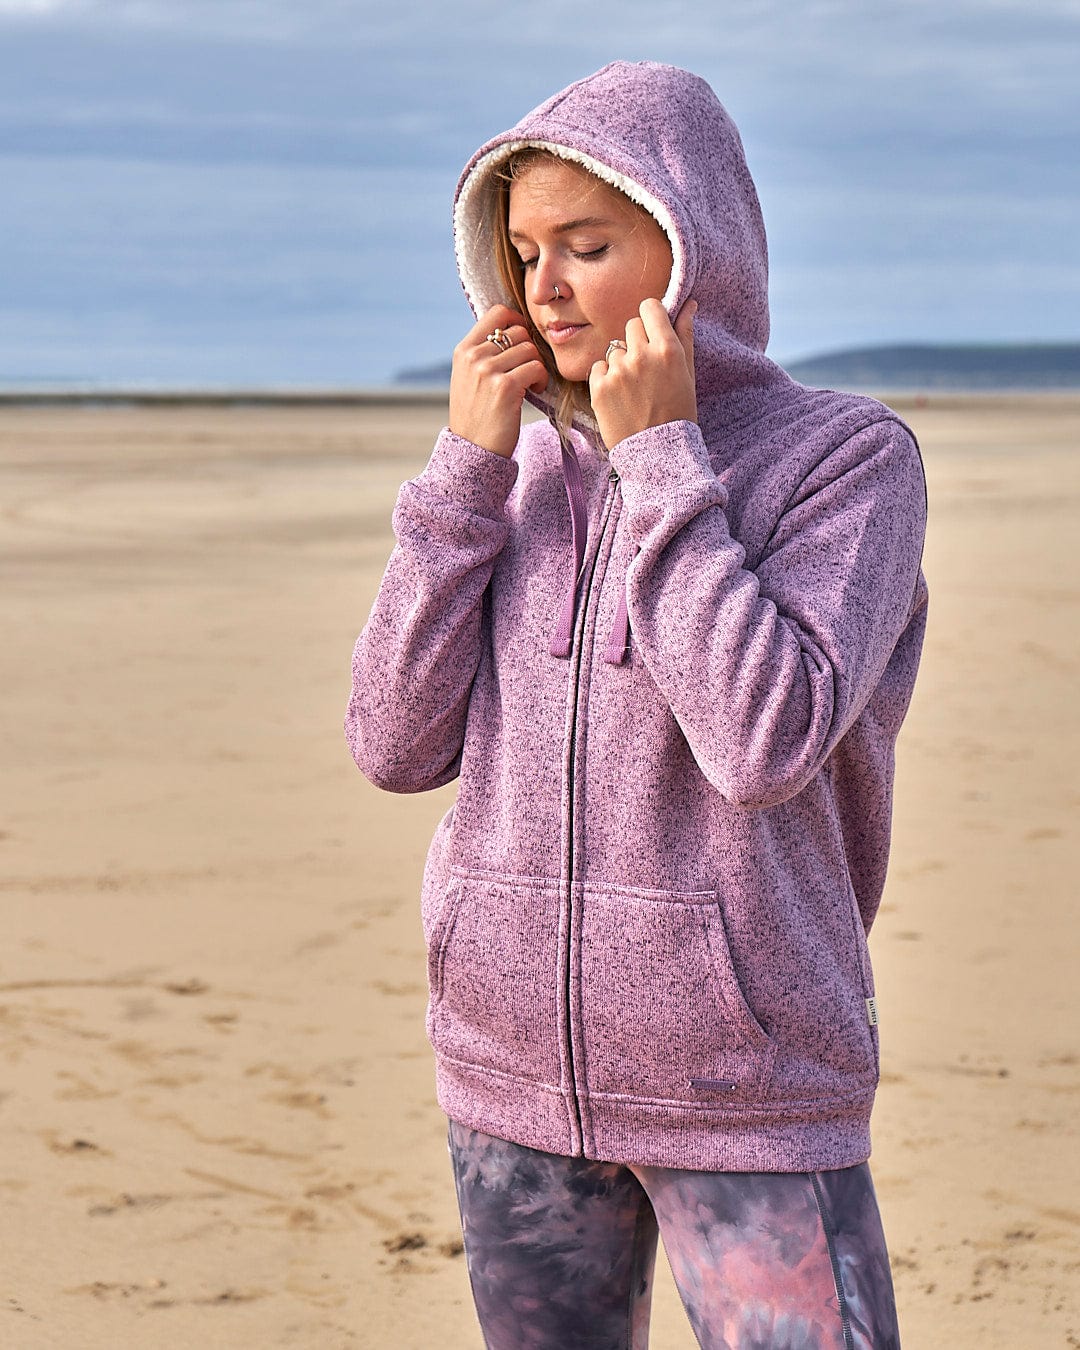 A woman in a Saltrock Farley - Lined Zip Hoodie - Purple standing on the beach.